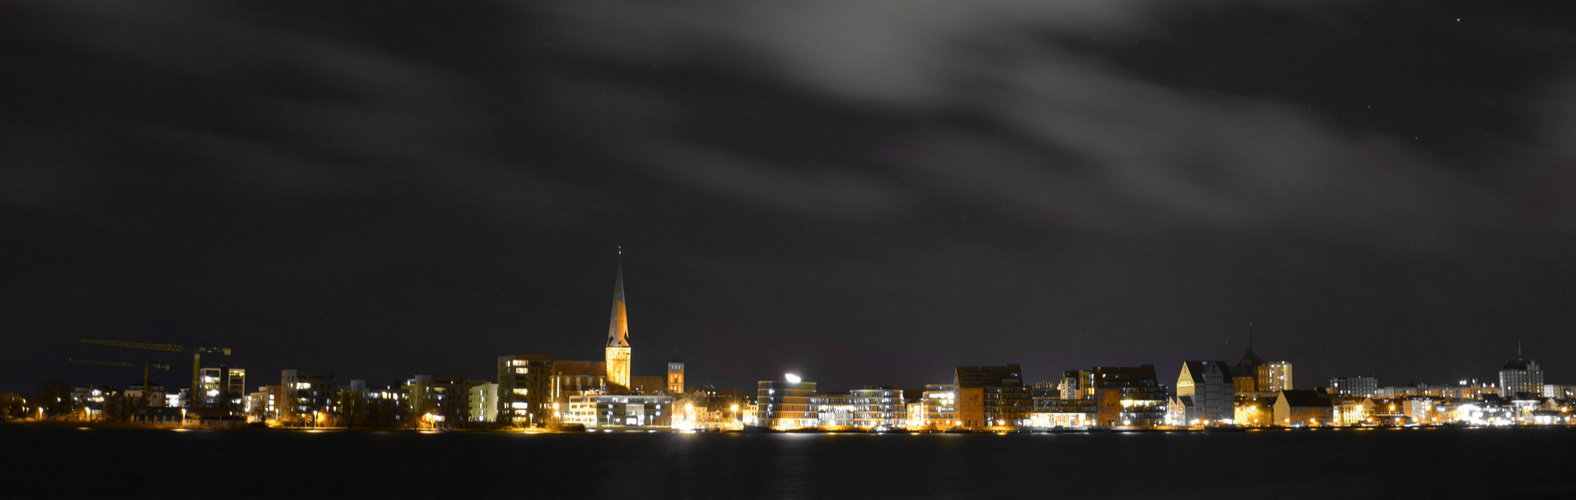  Rostock by Night